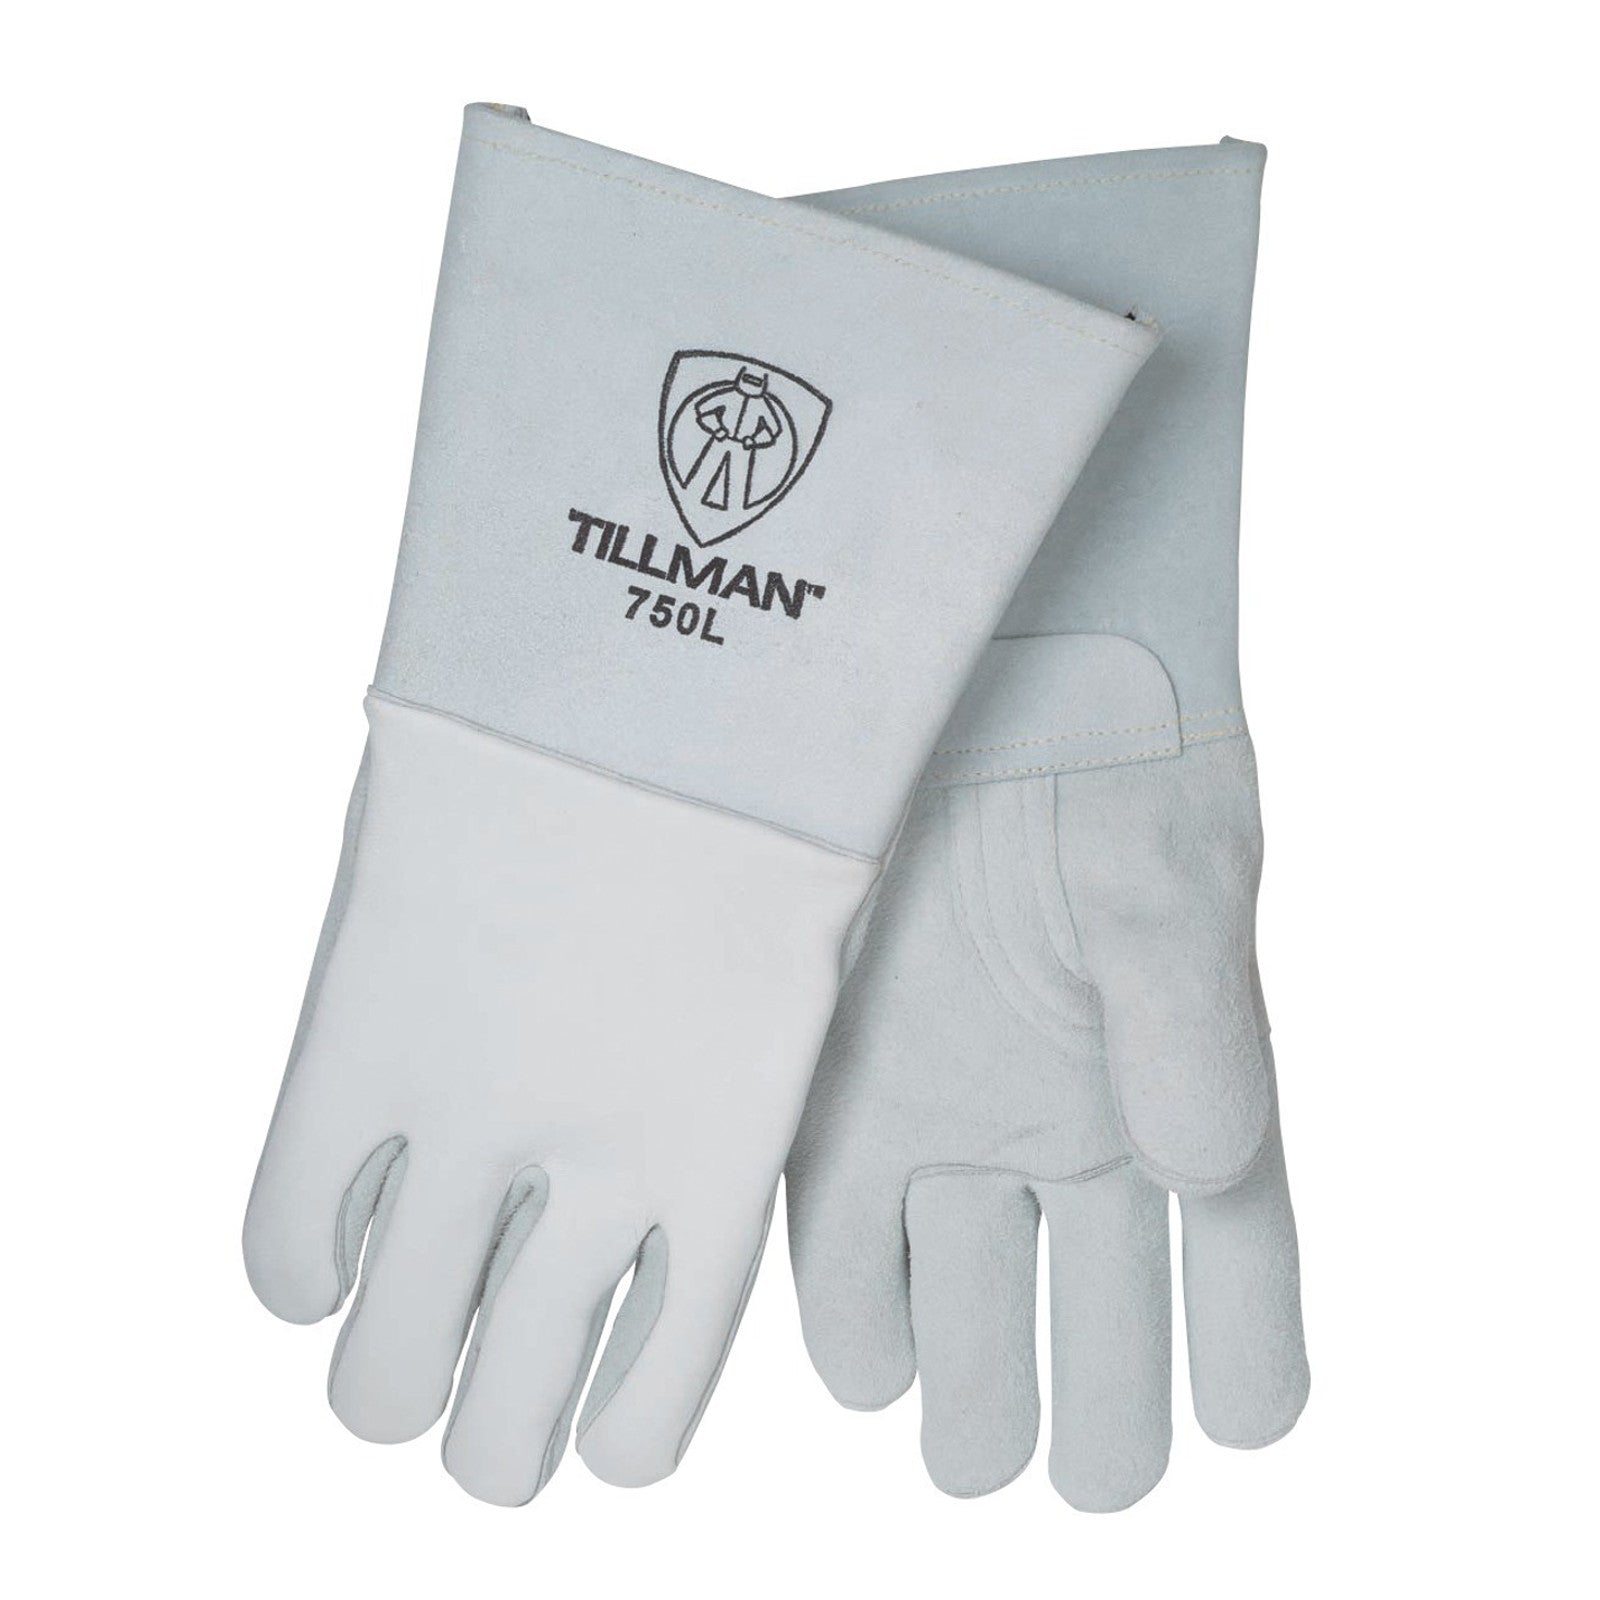 Tillman 750 Premium Elkskin Welding Gloves